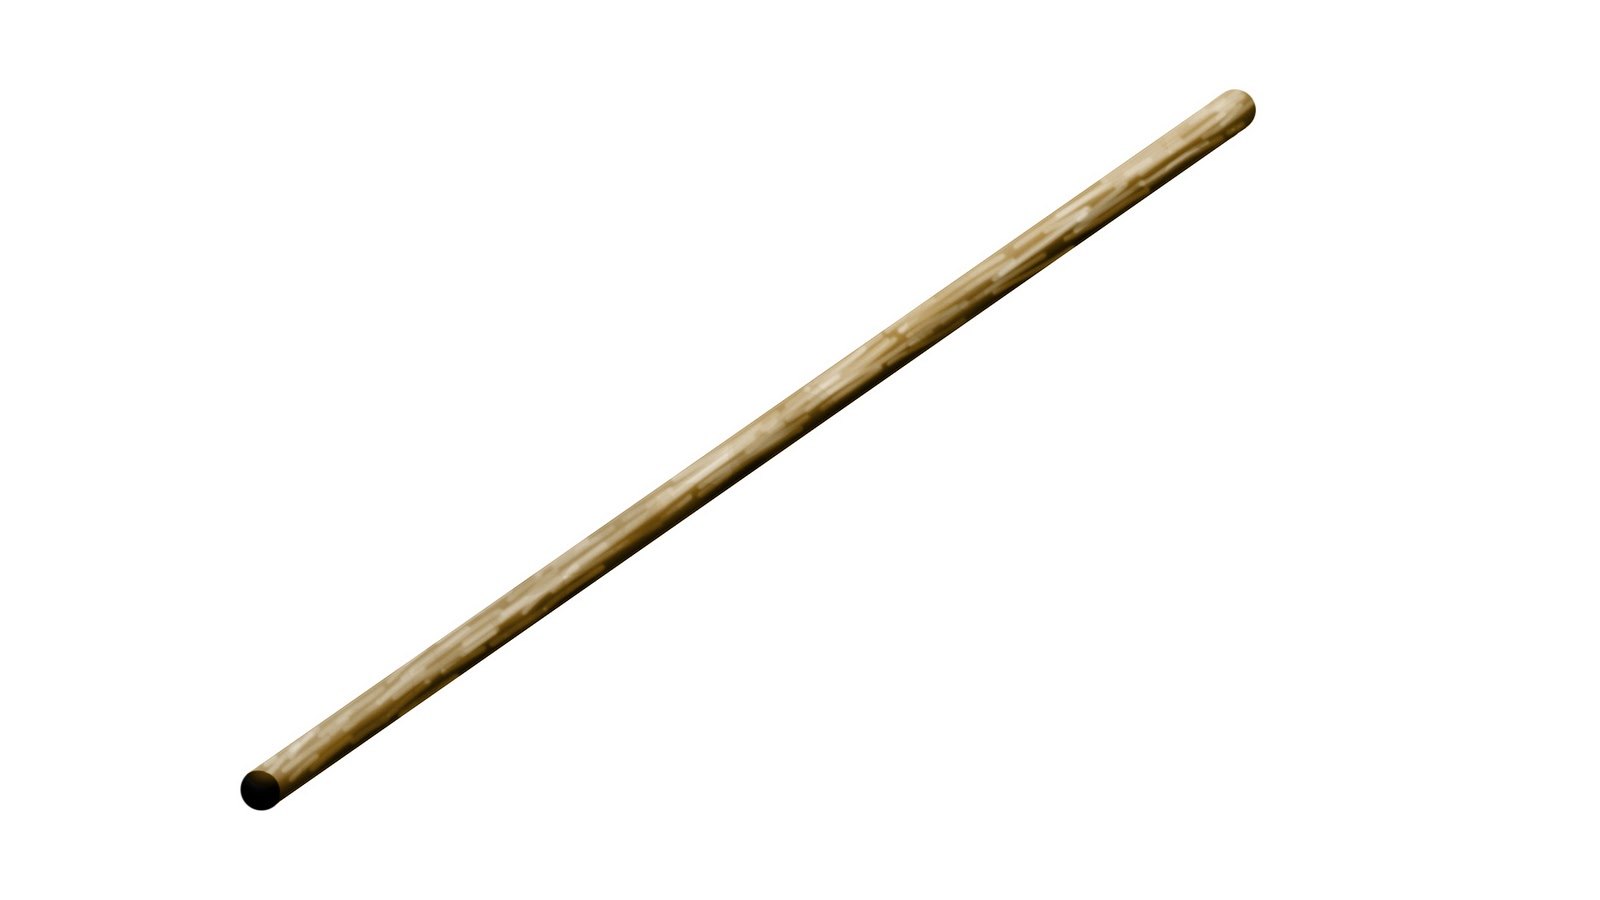 A wooden stick. Палка. Палка деревянная. Деревянные палочки. Длинная деревянная палка.